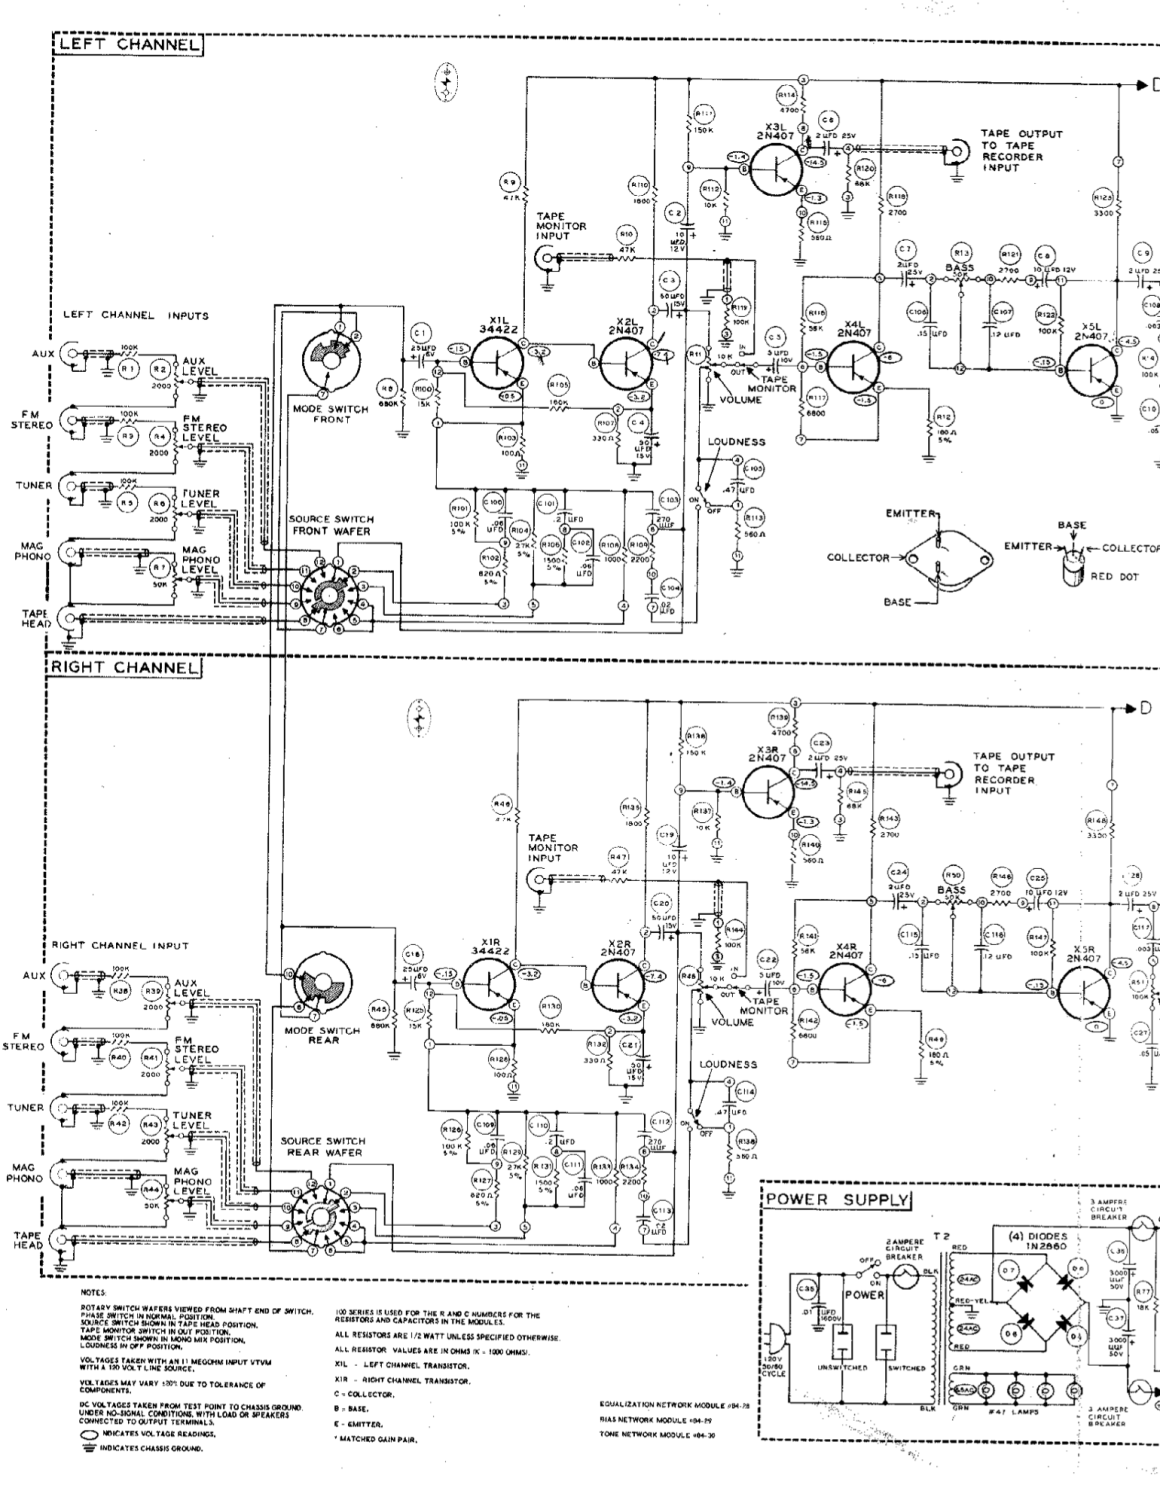 Heathkit AA-21A 50 Watt Amplifier - Schematic Diagrams